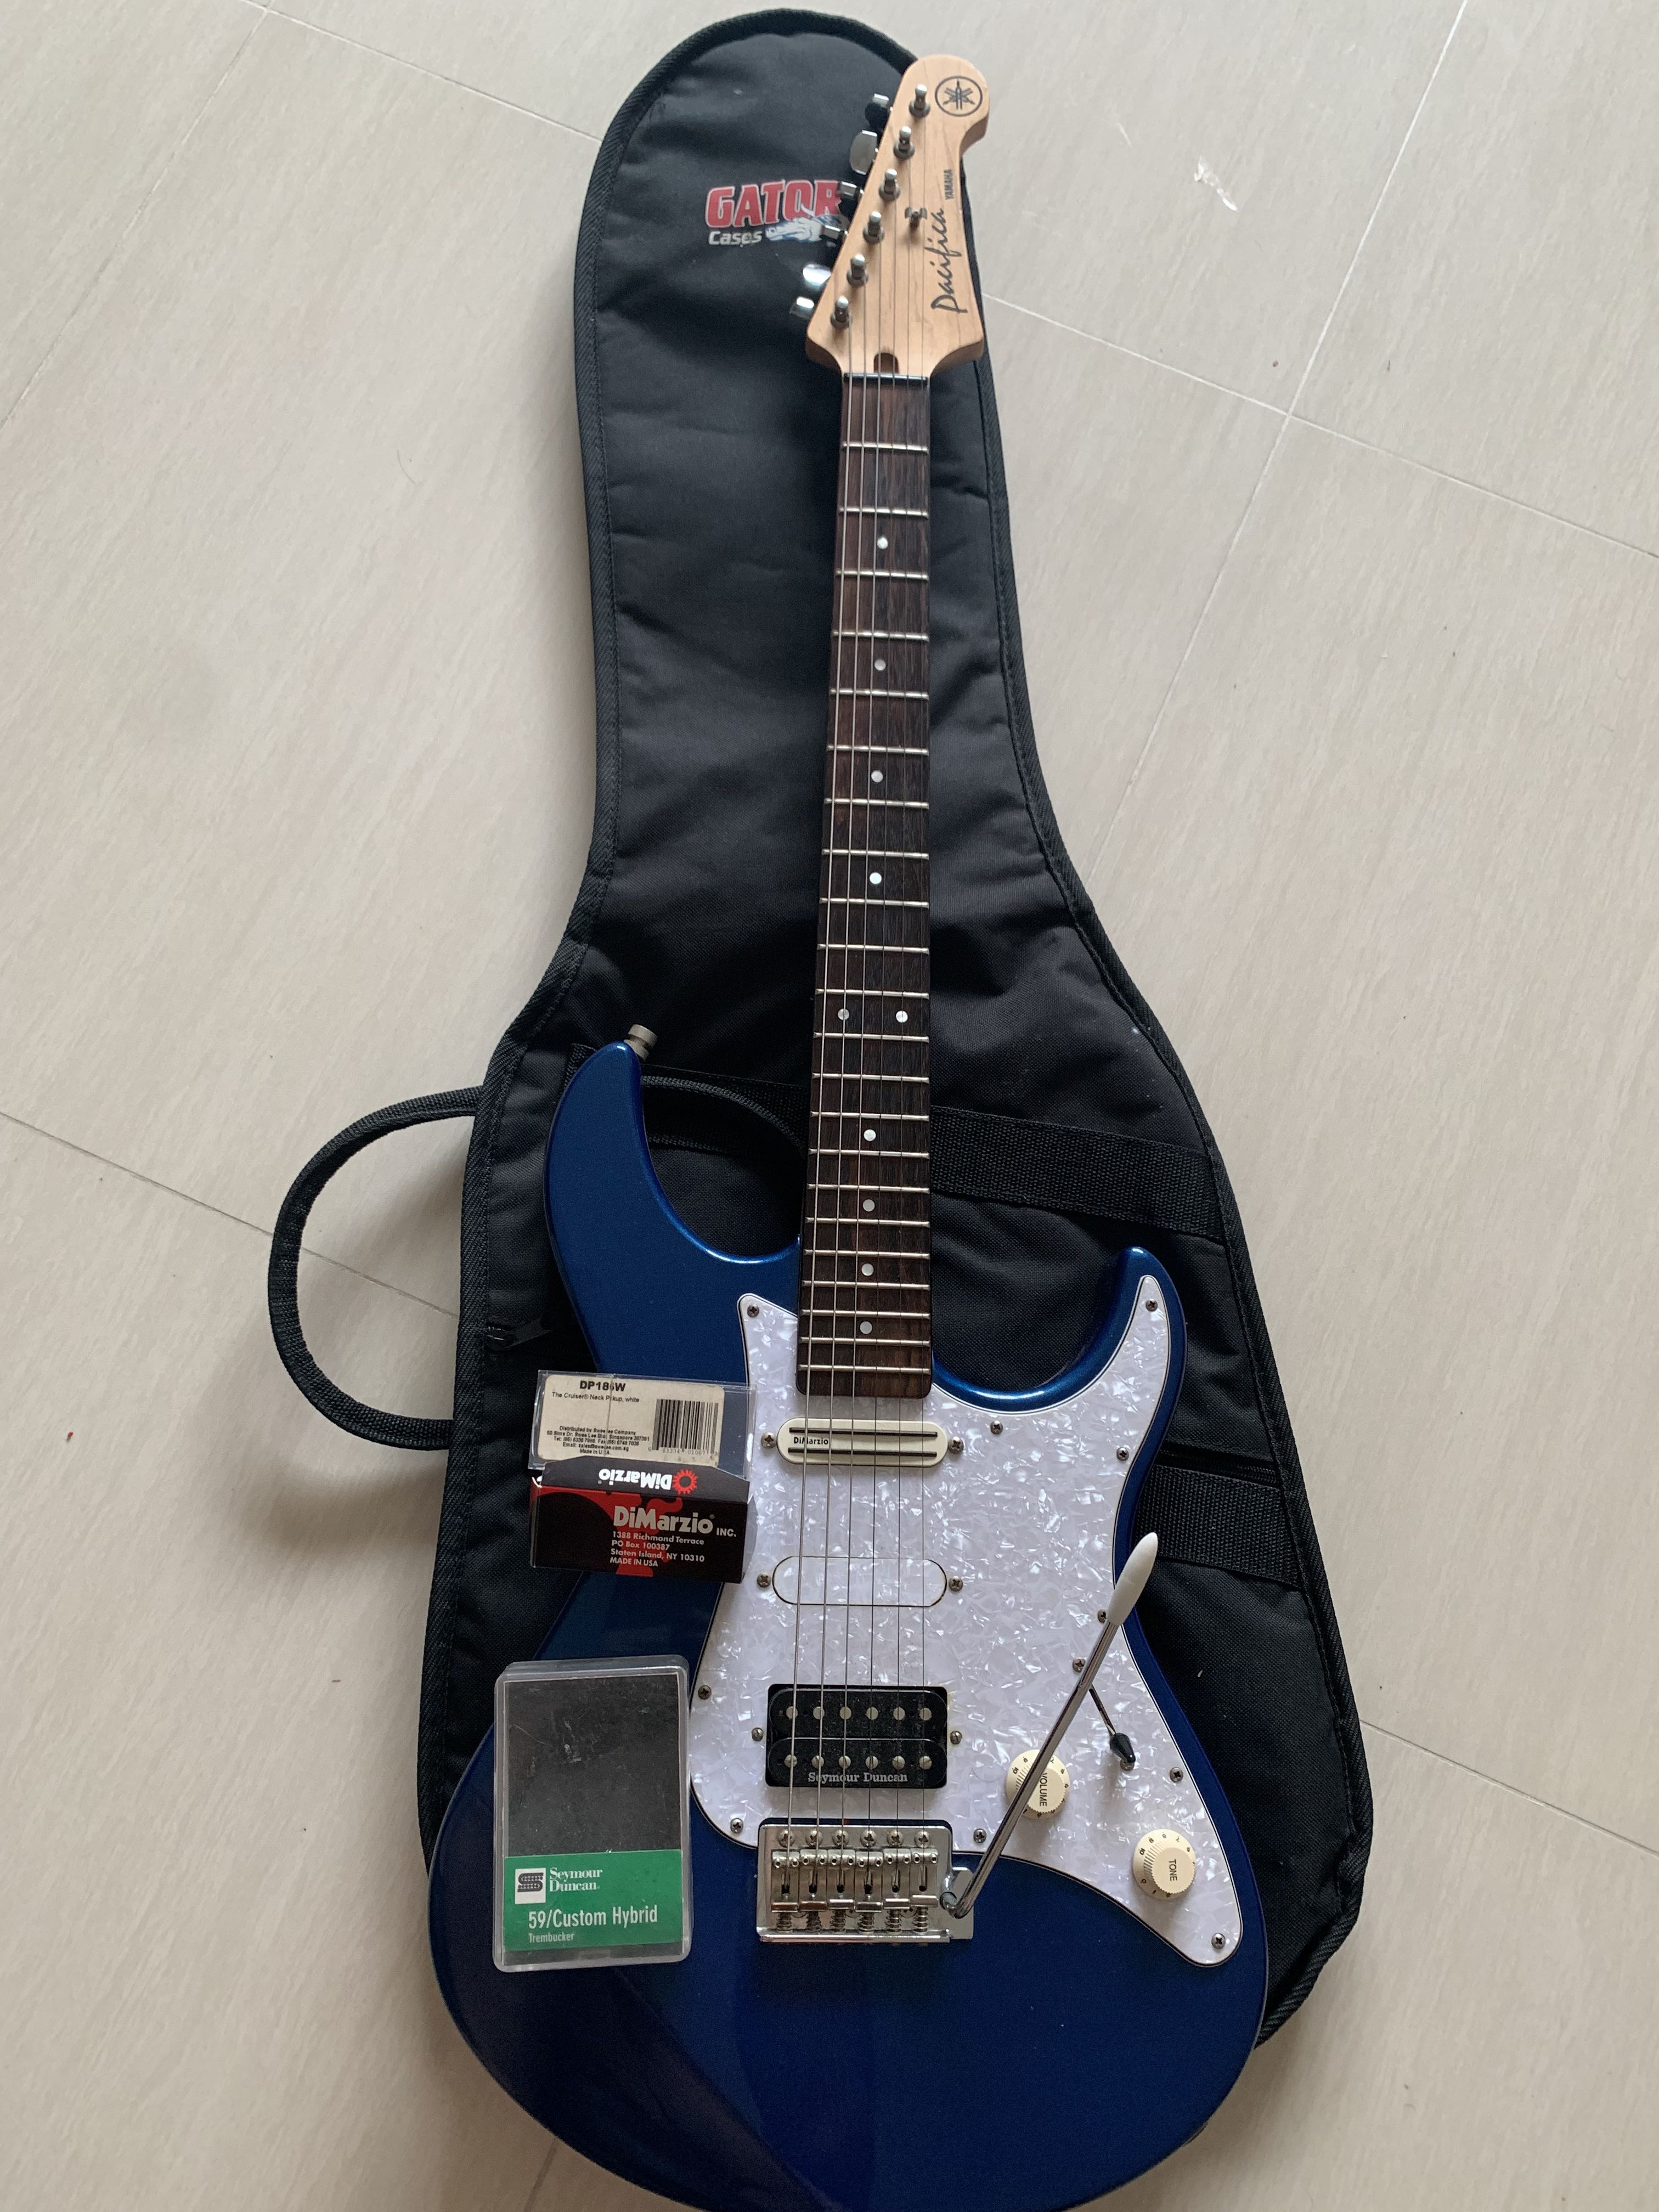 🎸 Yamaha Pacifica 012 electric guitar with Seymour Duncan